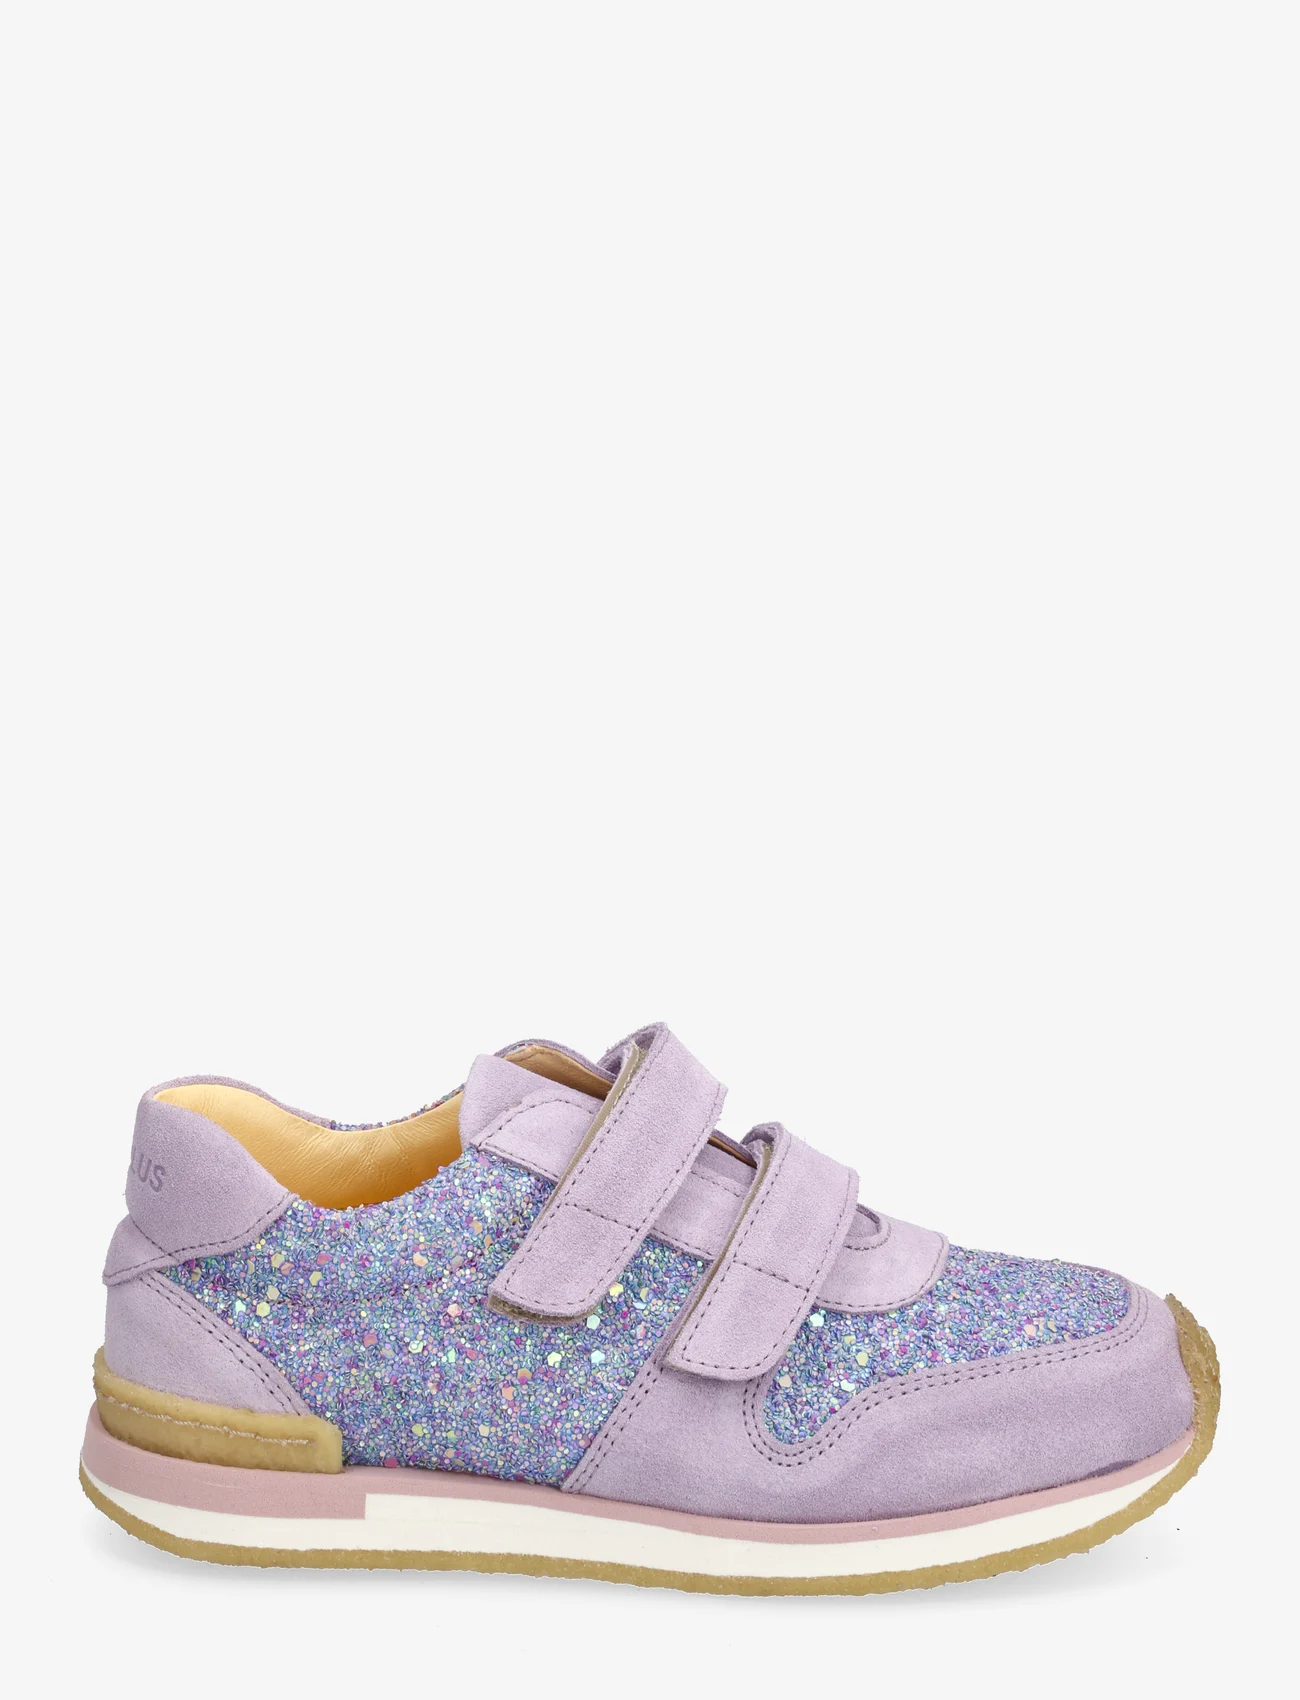 ANGULUS - Shoes - flat - with velcro - summer savings - 2245/2753 lilac/confetti glitt - 1